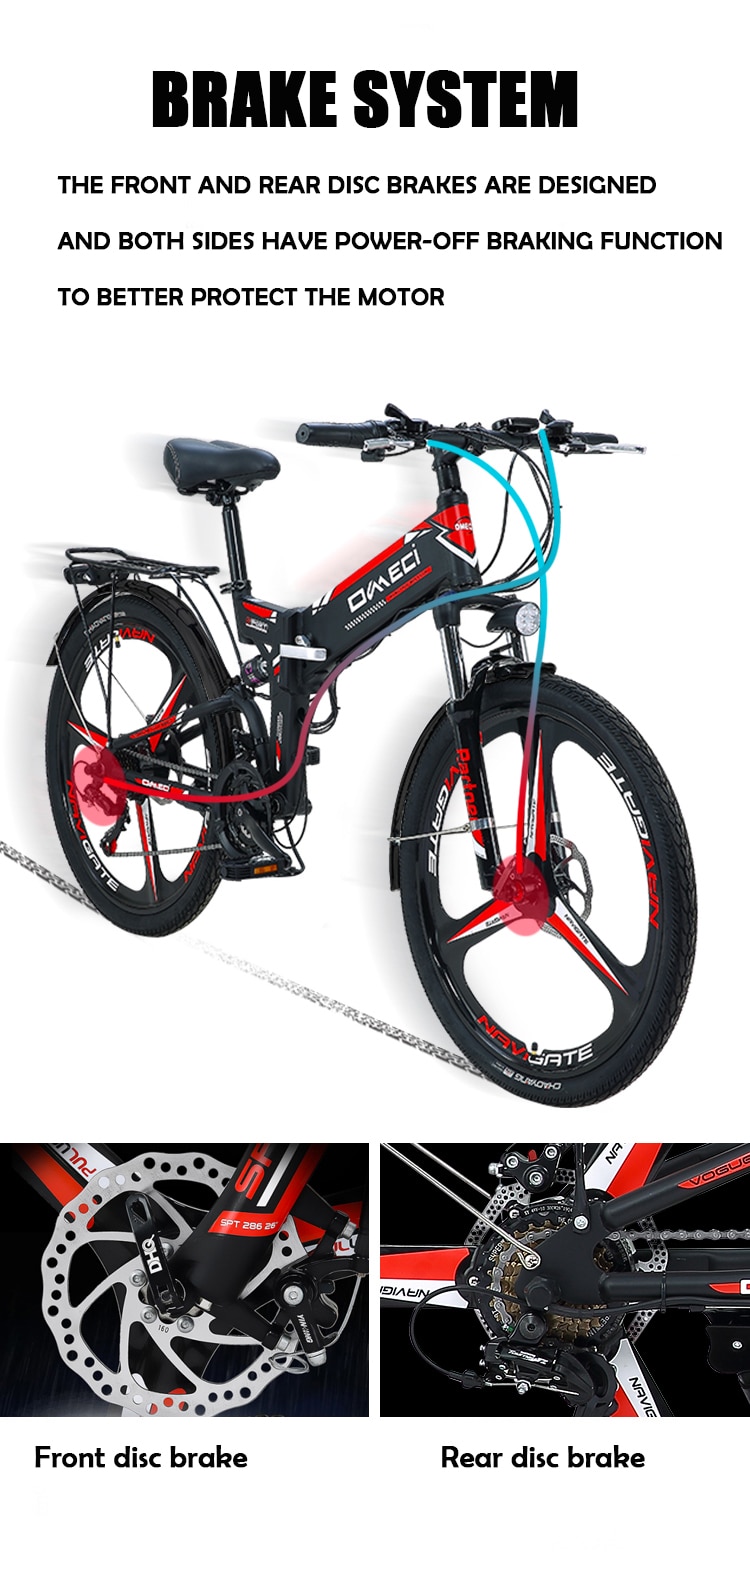 OMECI Electric Bike 48V Lithium Battery Auxiliary Electric Mountain Bike 26 Inch Folding Bicycle Multi-Mode E-Bike Men/Women